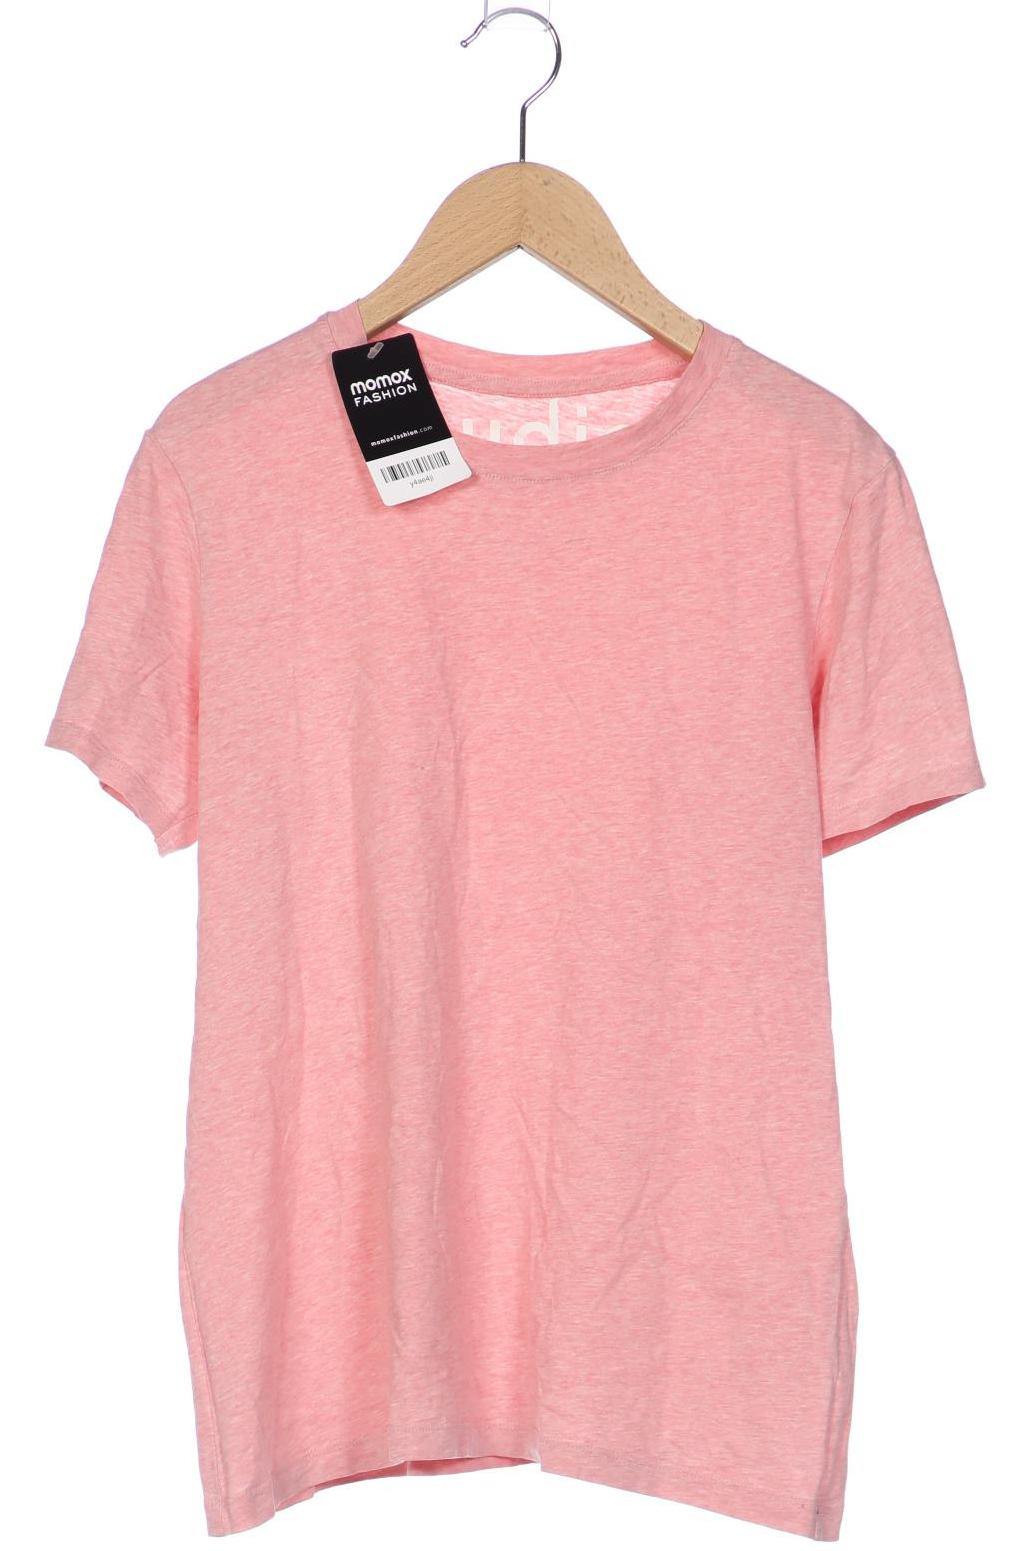 Acne Studios Herren T-Shirt, pink, Gr. 46 von Acne Studios